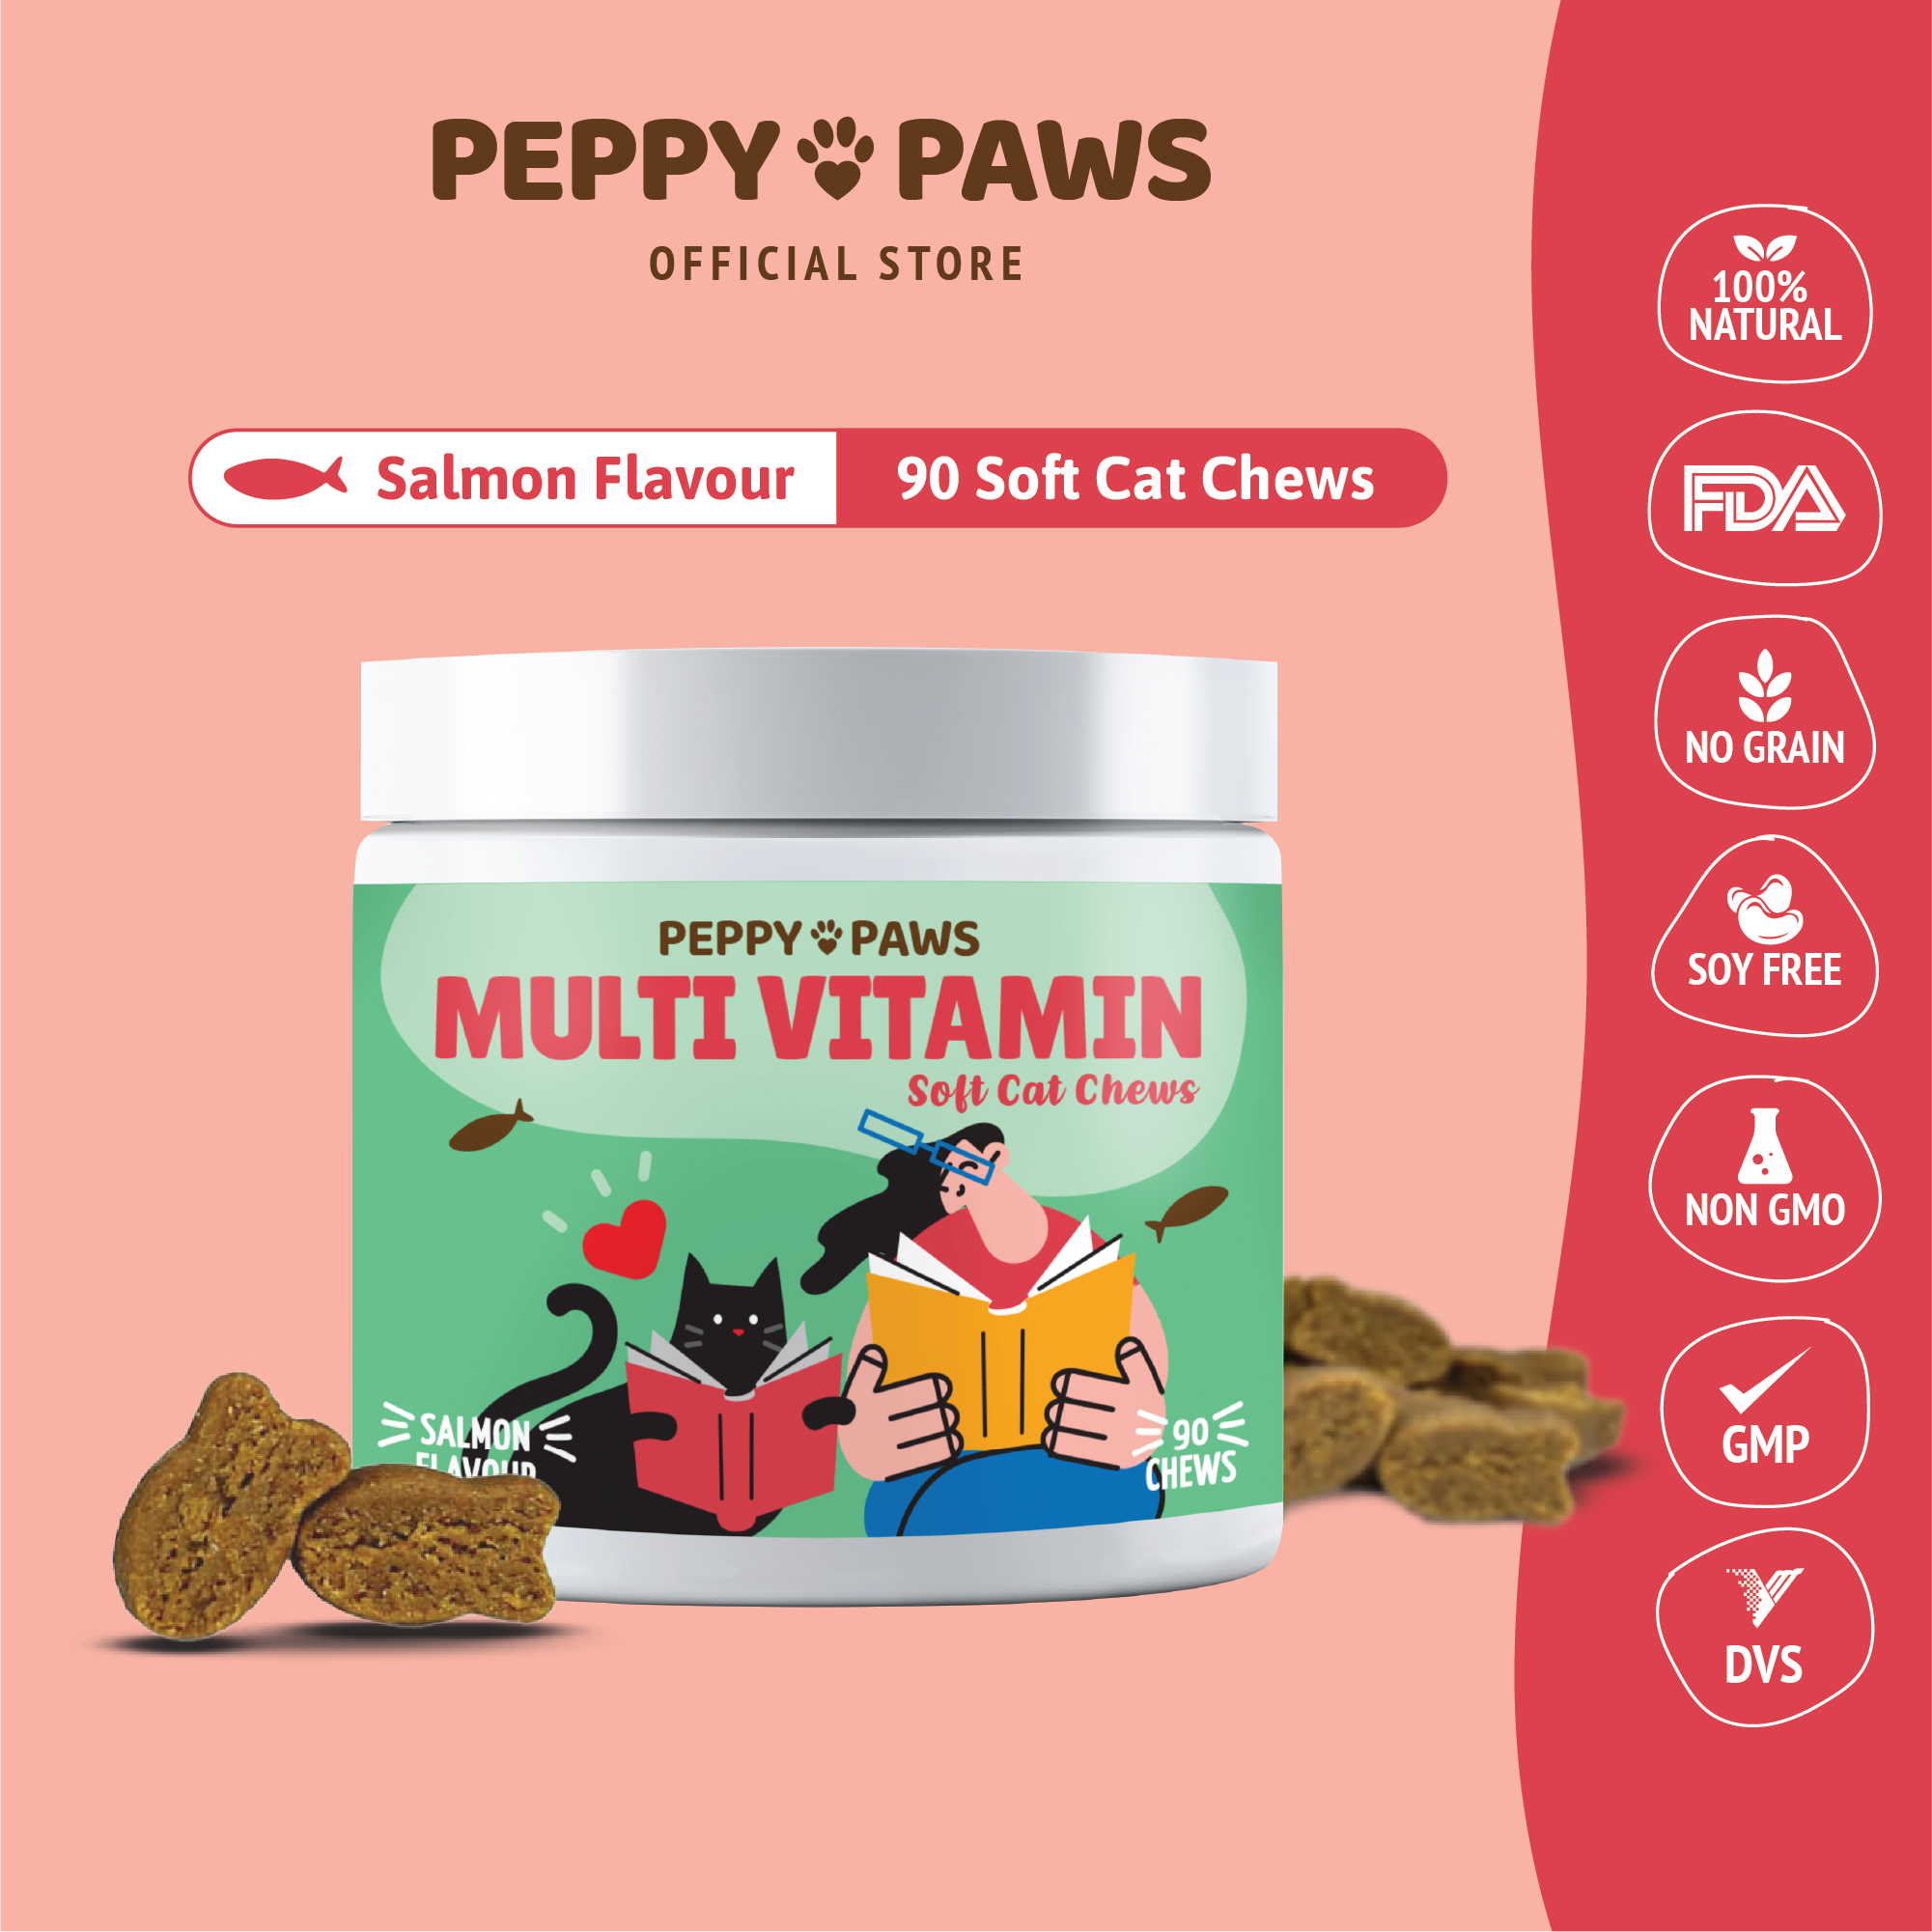 Peppy Paws Multivitamin Soft Cat Chews (90 Chews)